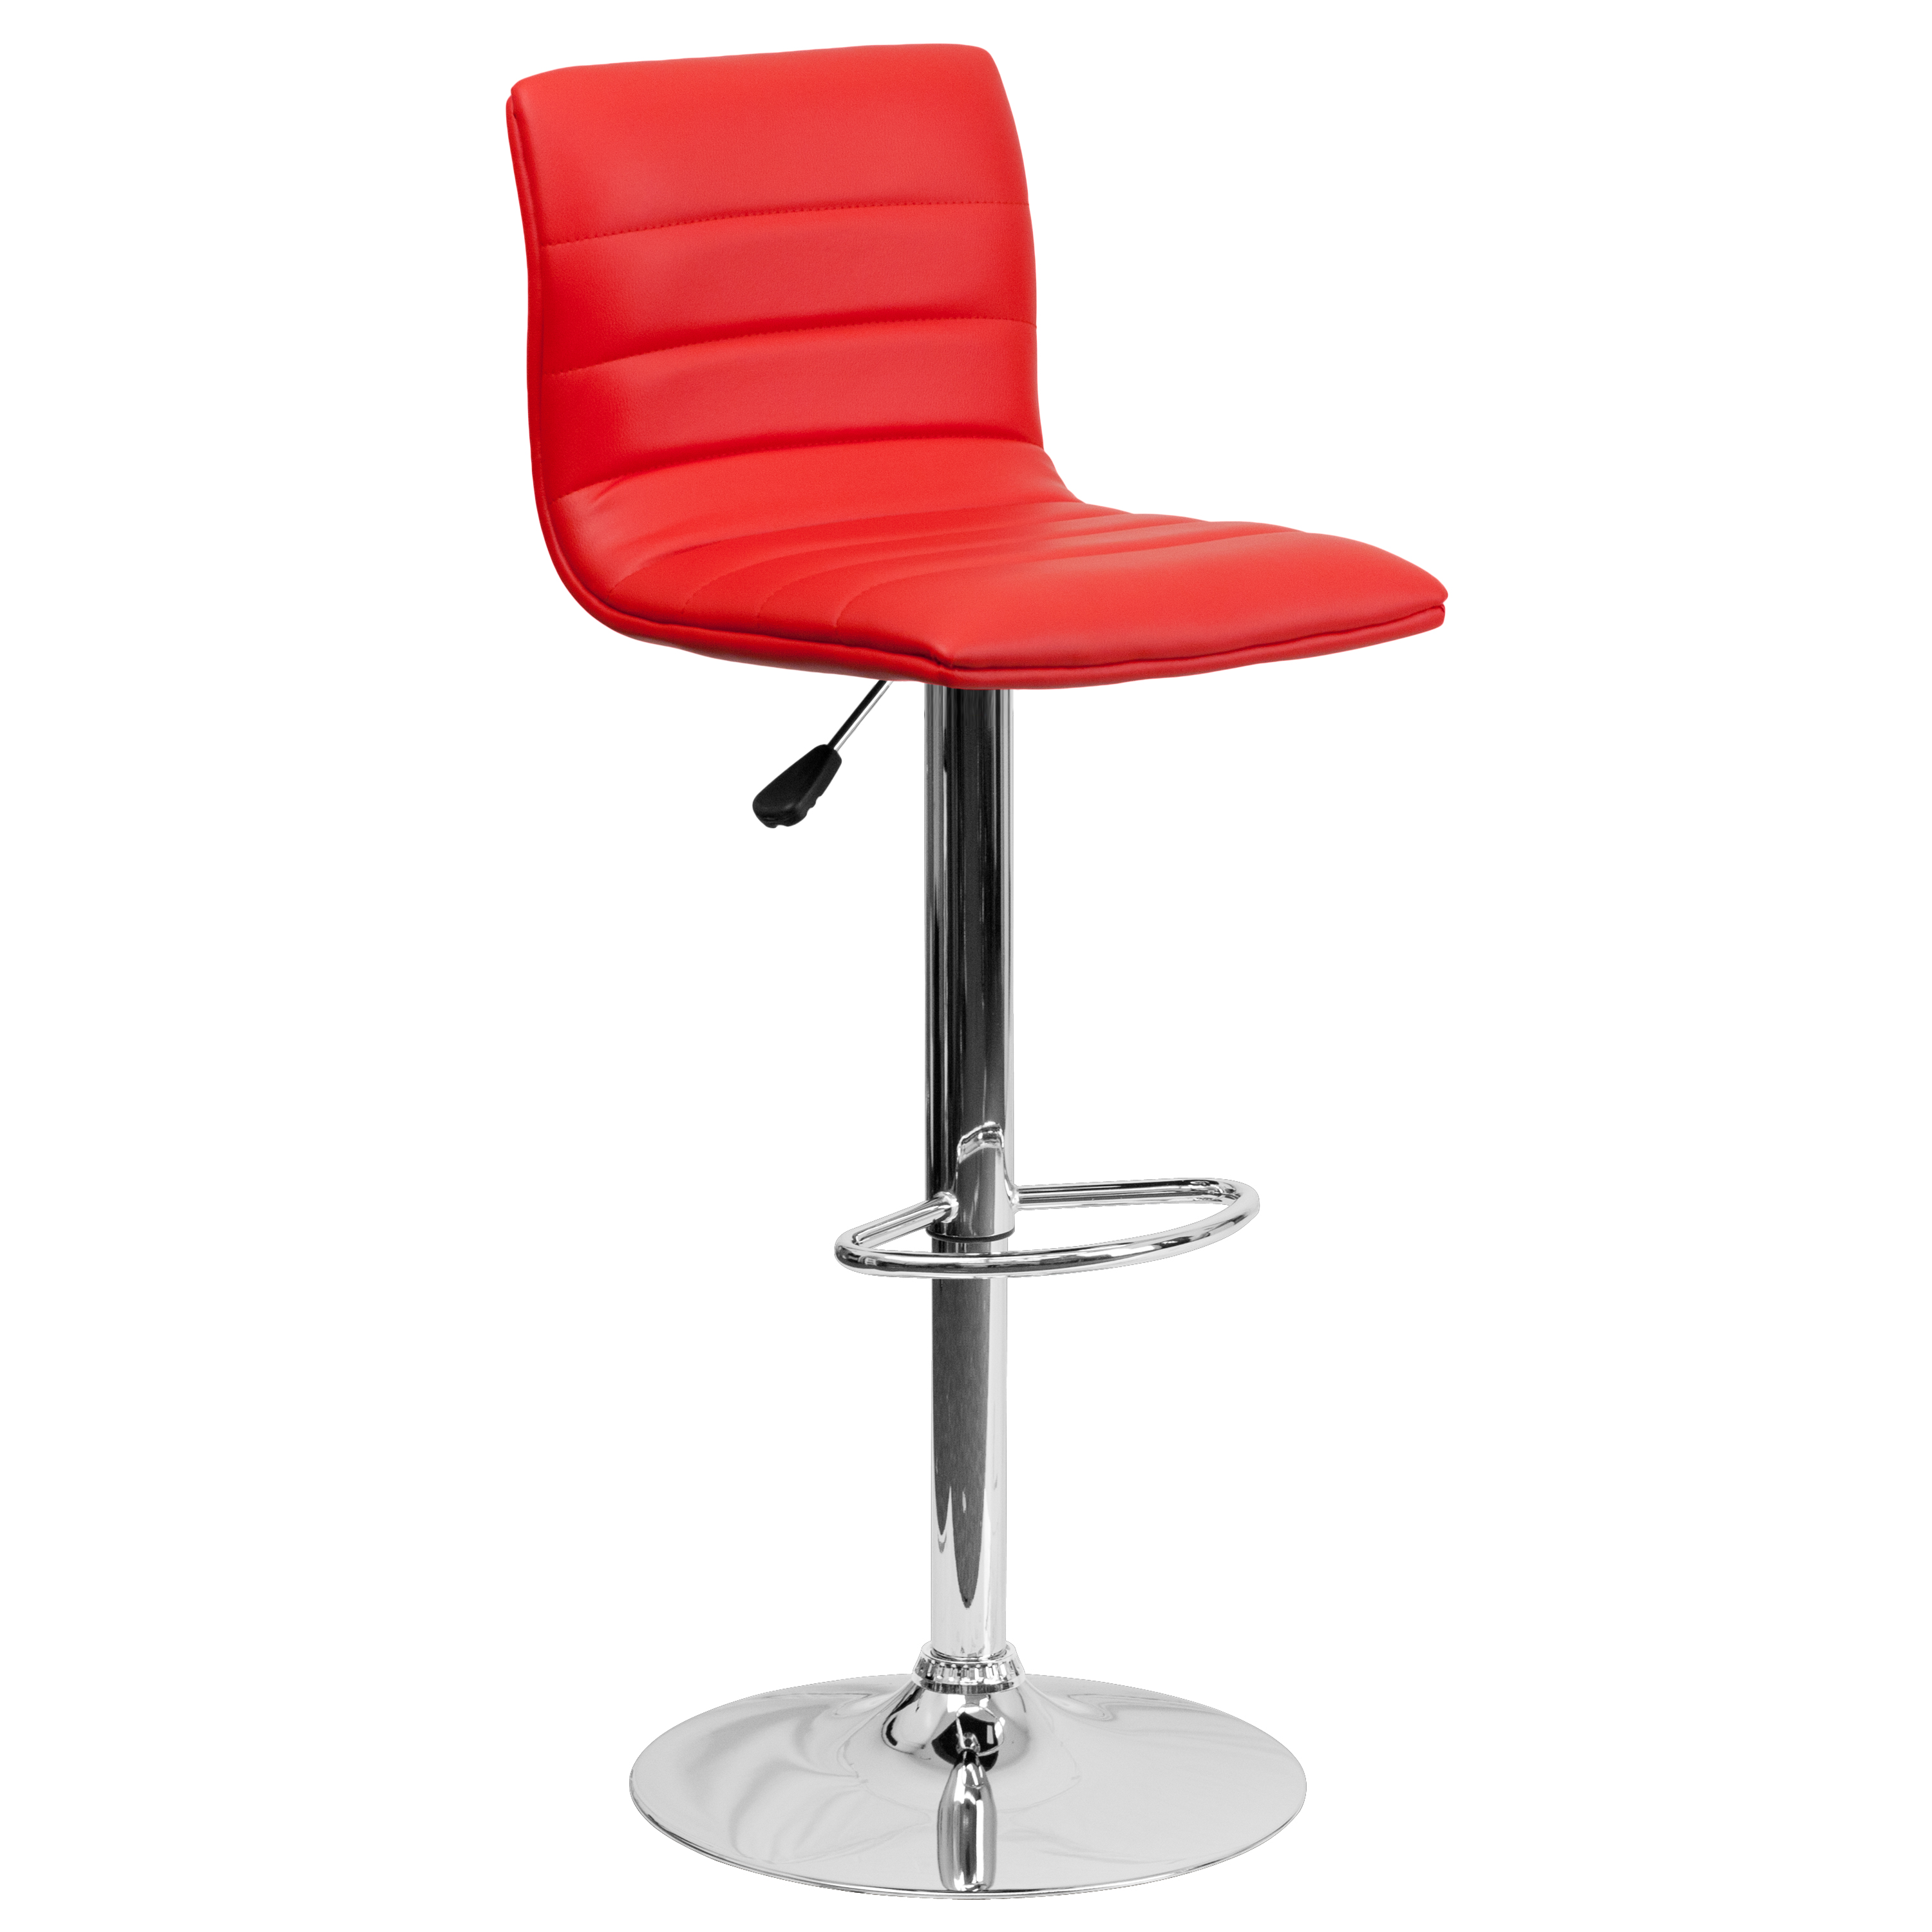 Flash Furniture CH-92023-1-RED-GG Modern Red Vinyl Adjustable Bar Swivel Stool with Back, Chrome Base, Footrest